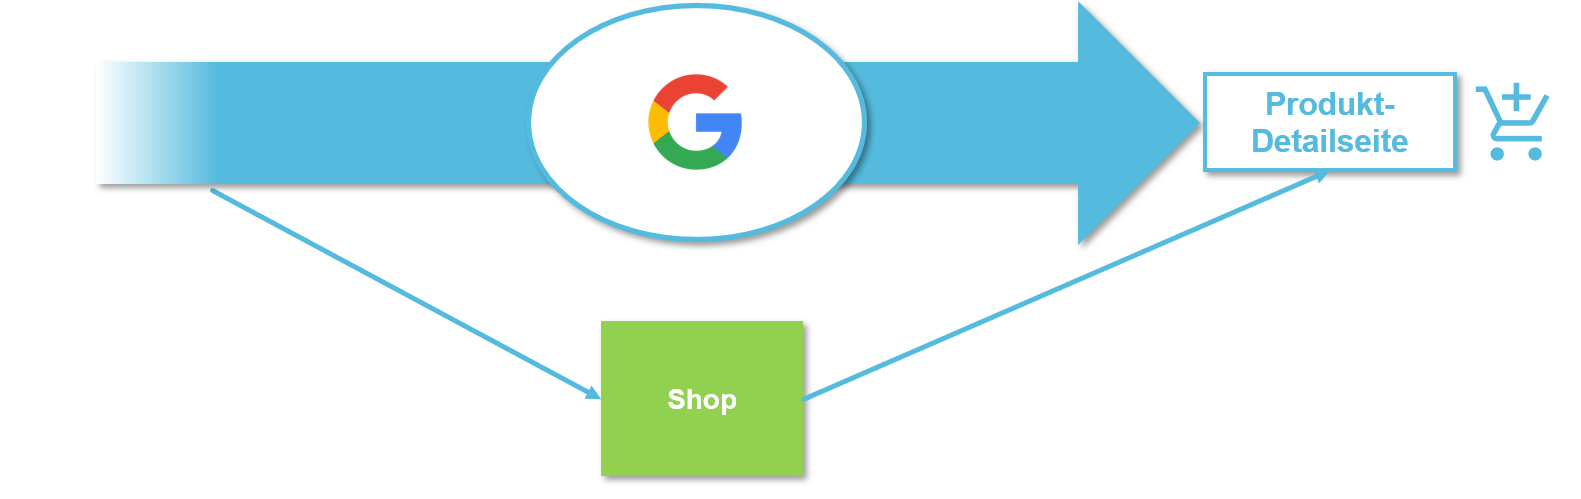 customer journey kundenfluss google shop offsite visbility